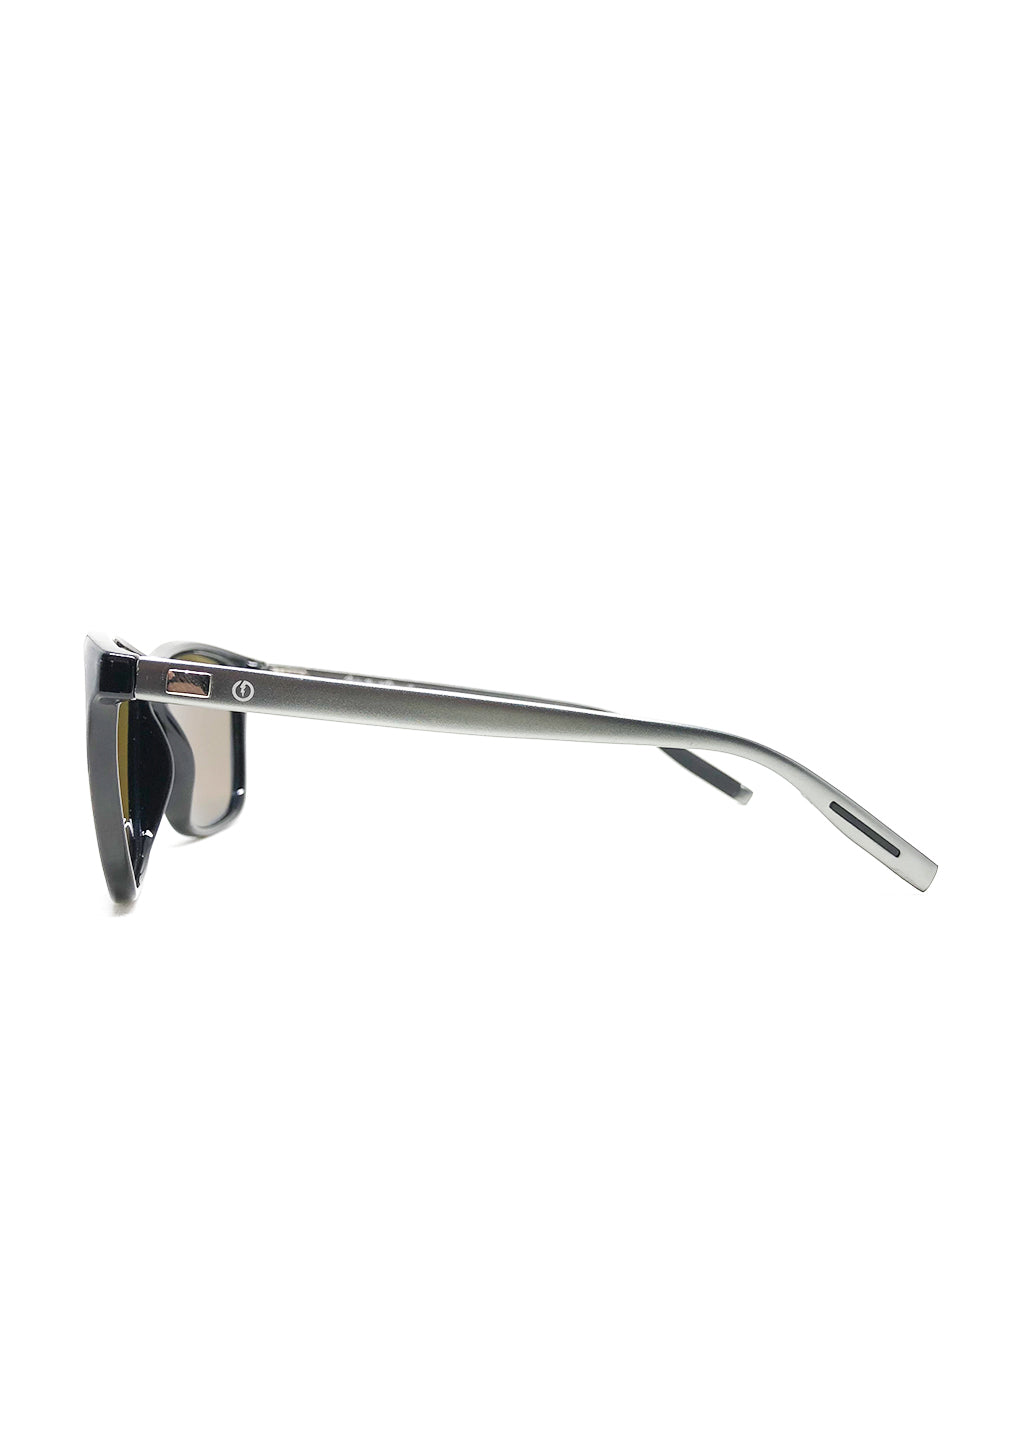 Noord Wayfarer sunglasses - Details